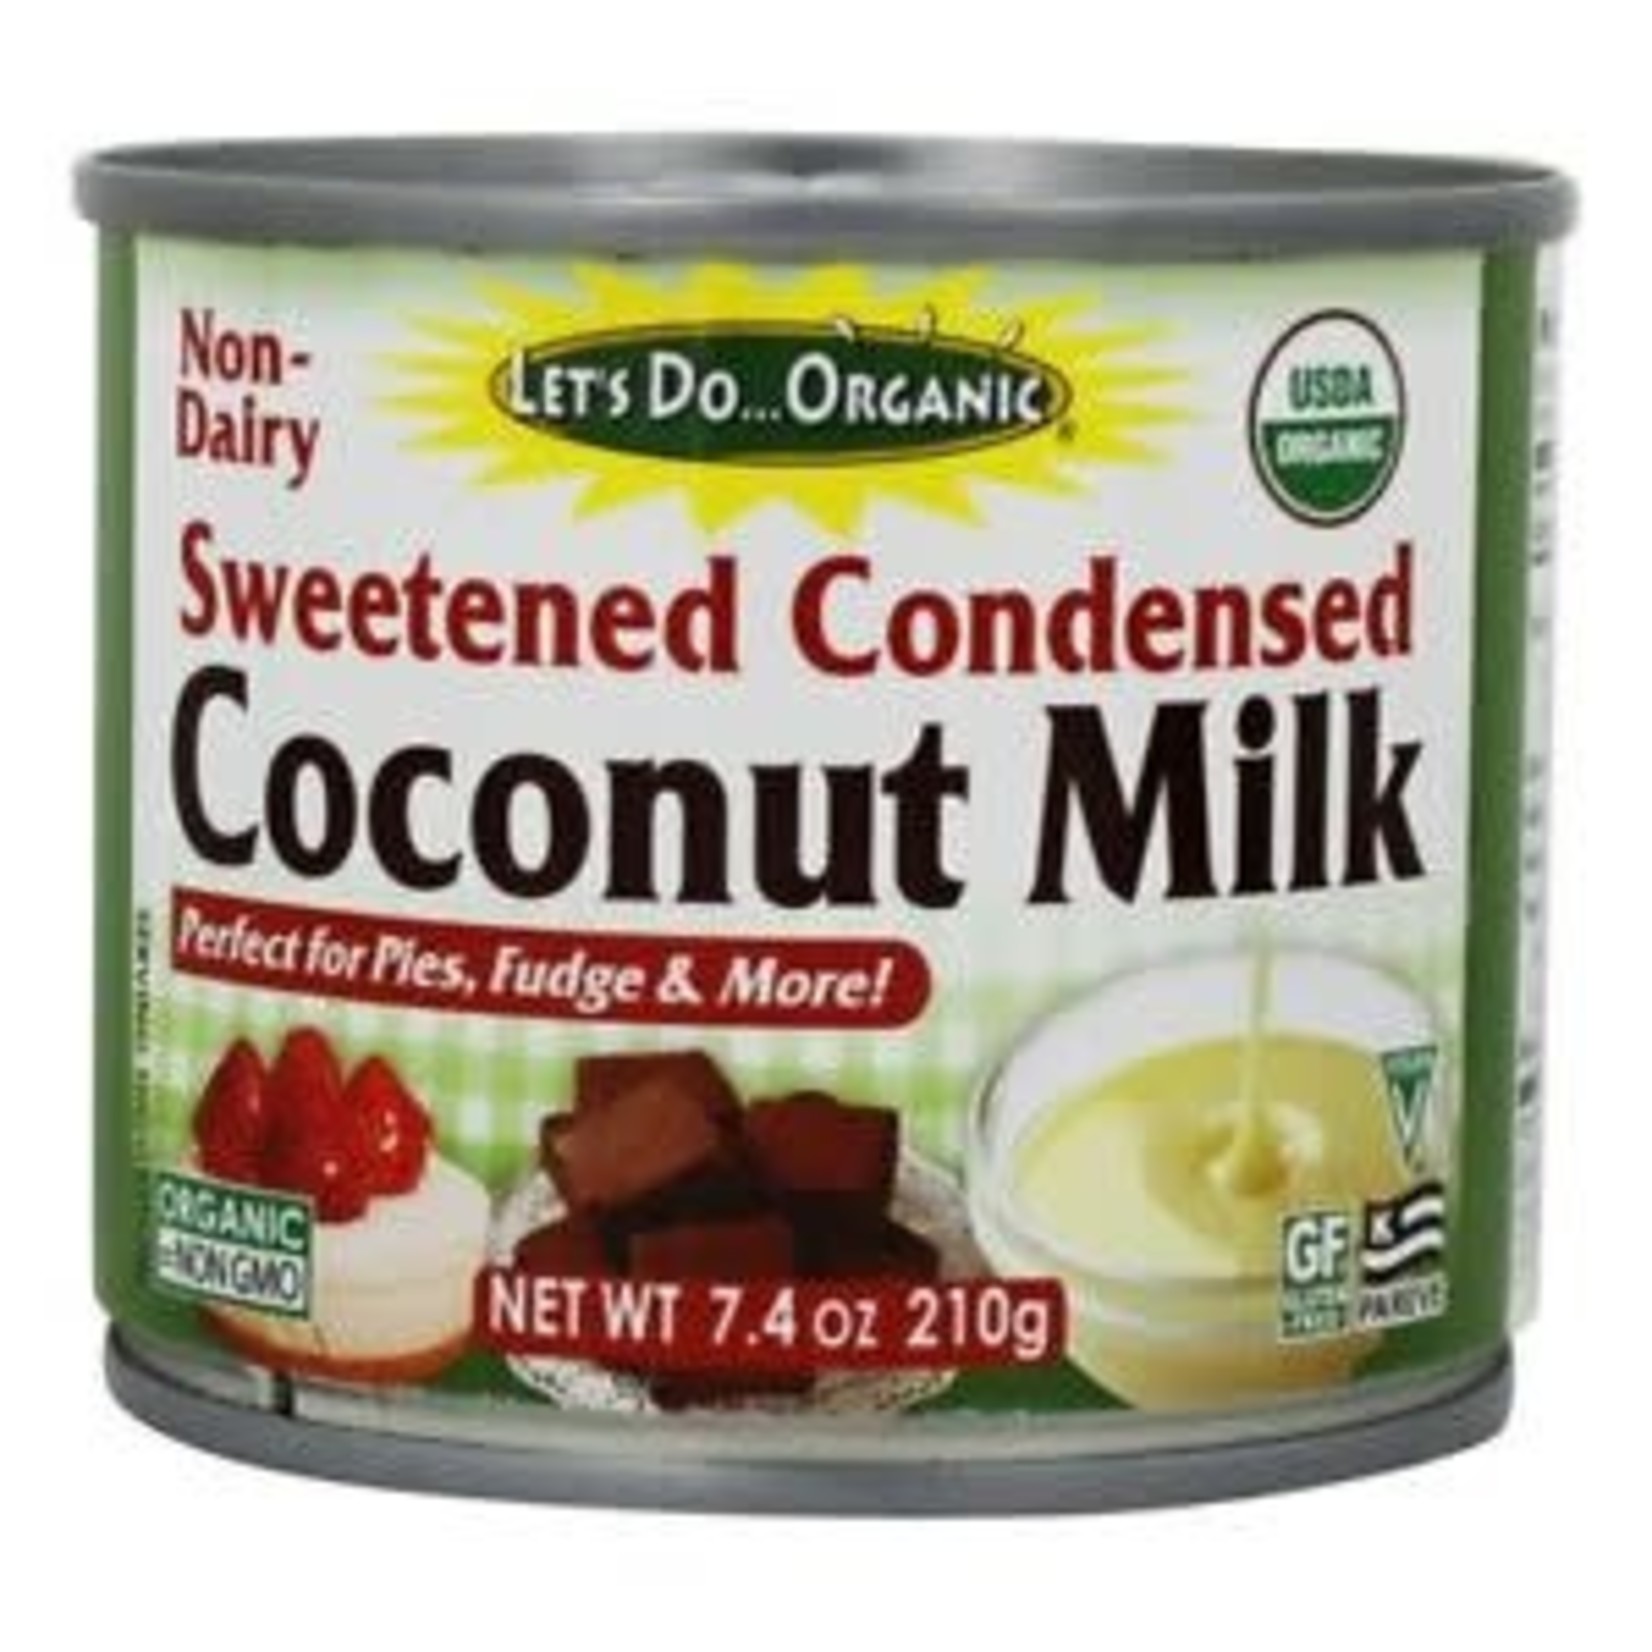 Let’s Do Organic Let’s Do Organic Sweetened Condensed Milk